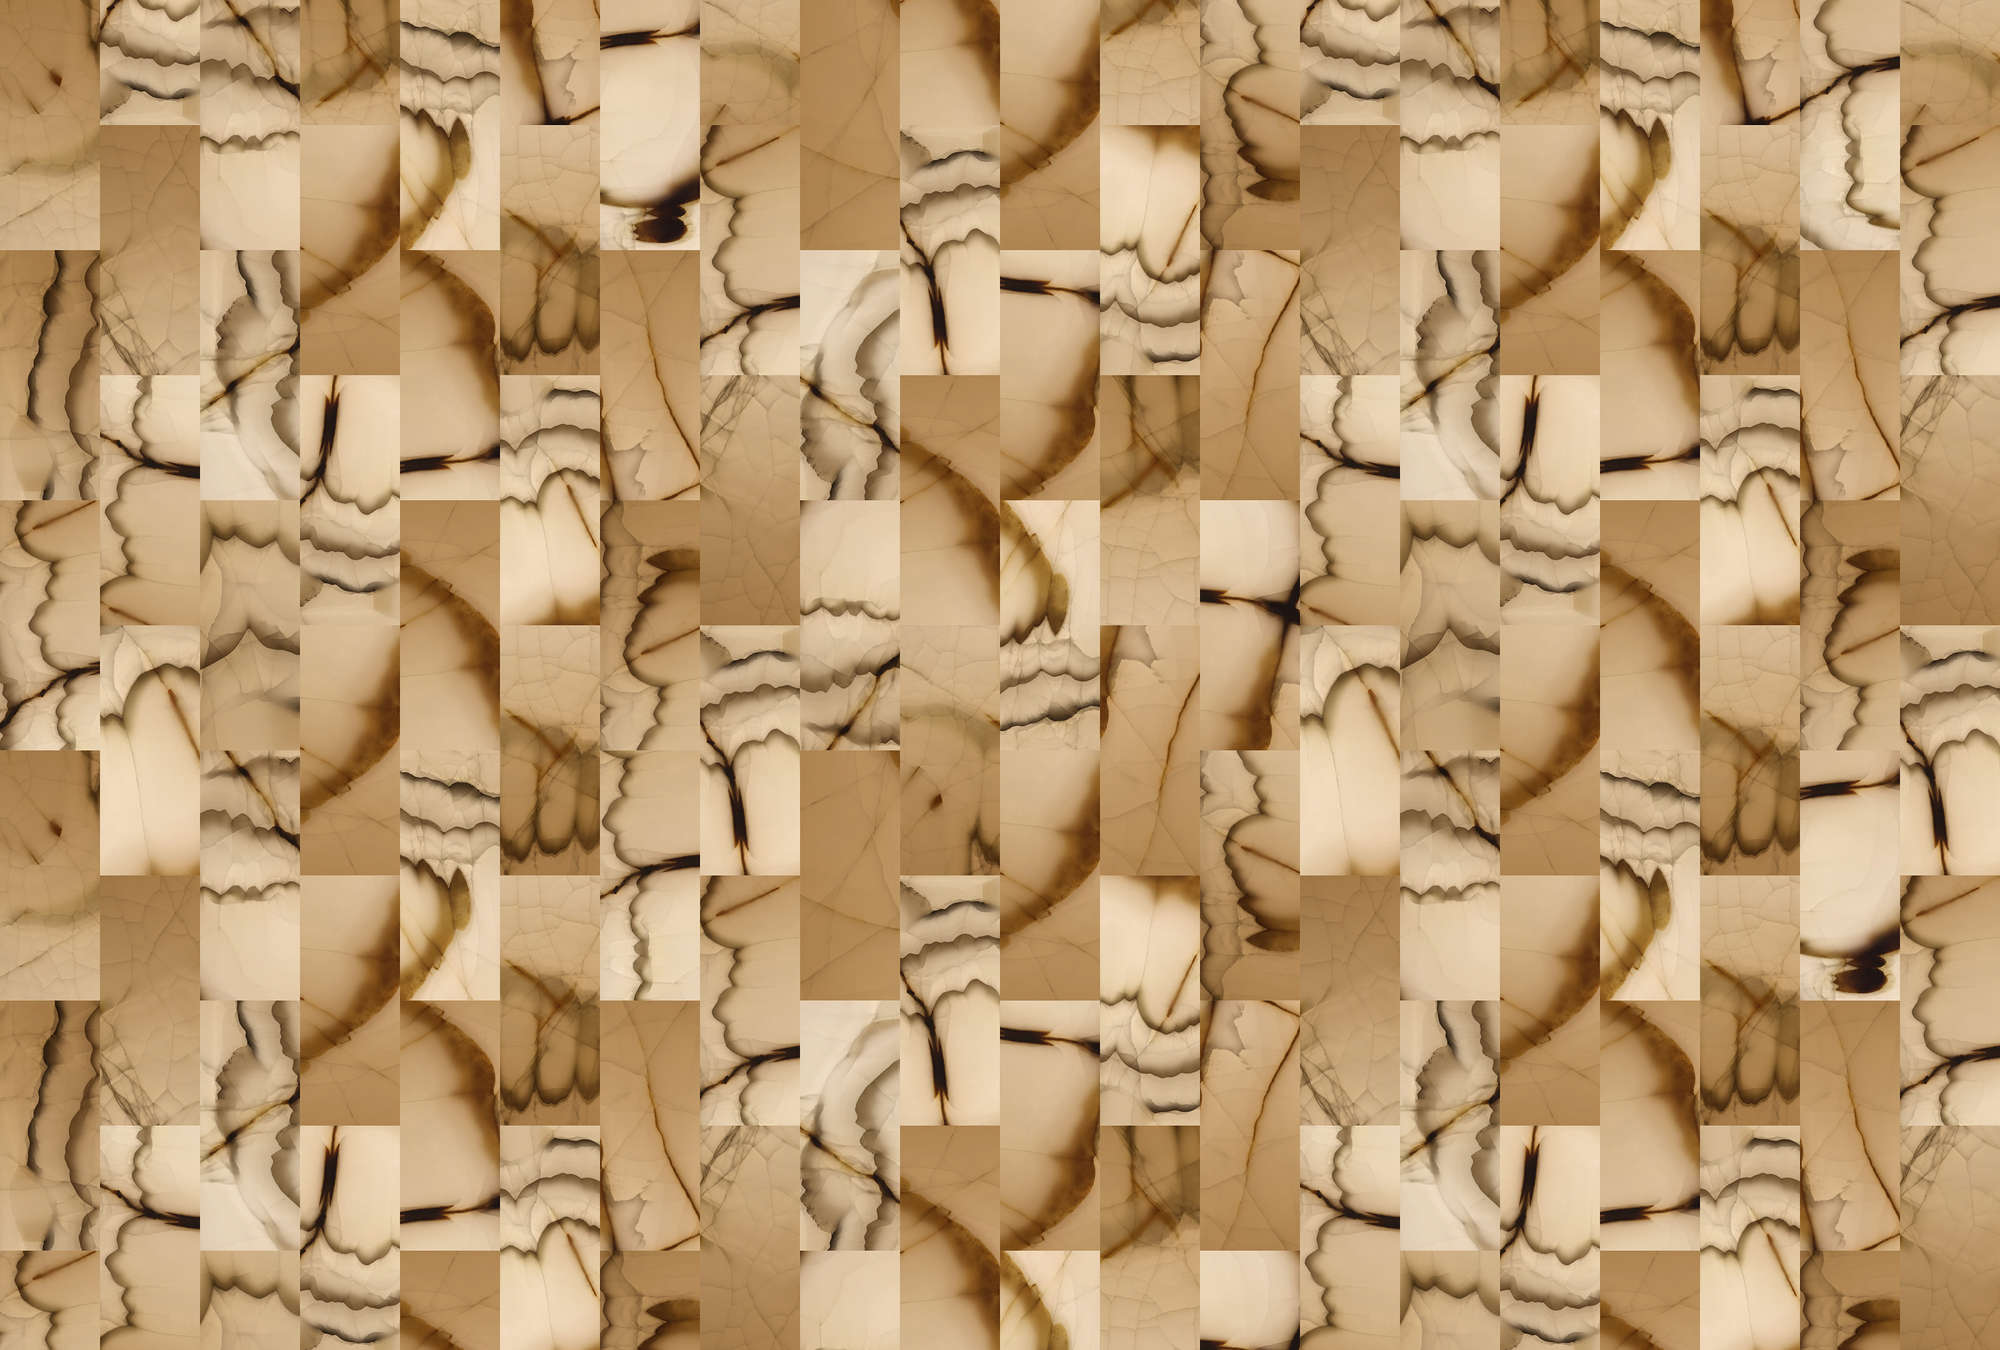             Piedra cortada 1 - Mural abstracto con aspecto de piedra - Beige, Marrón | Vellón liso mate
        